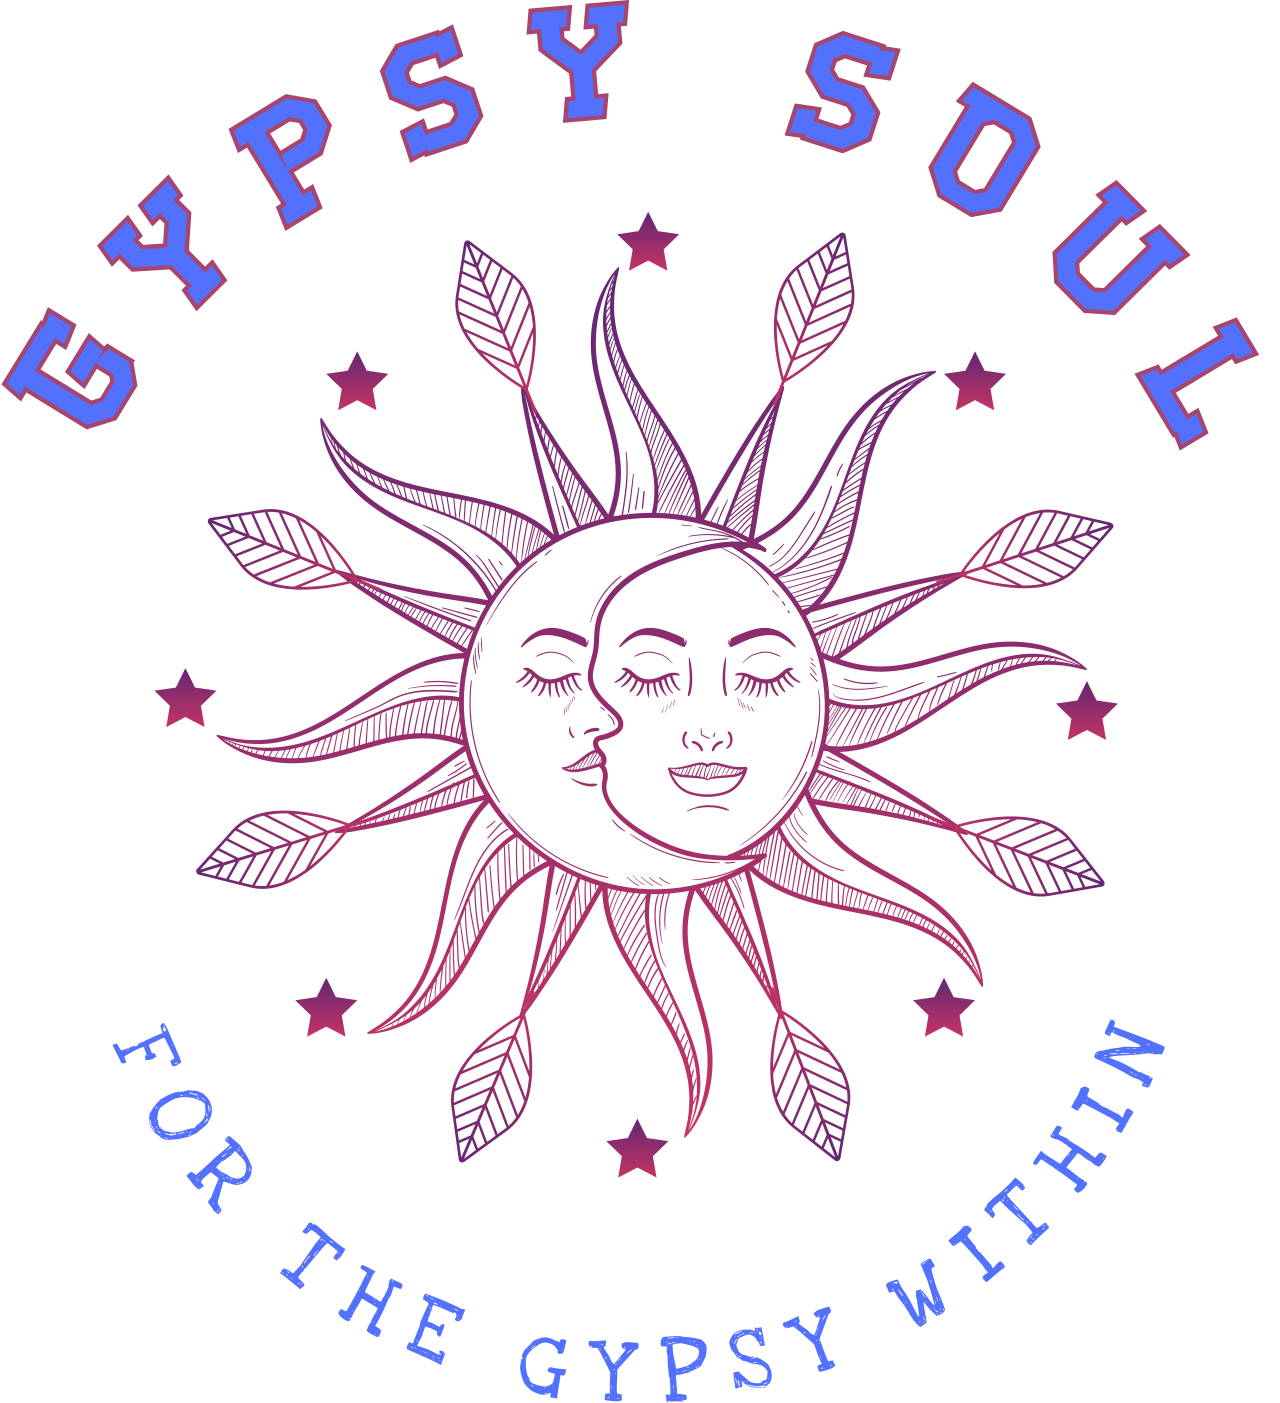 GYPSY SOUL's logo